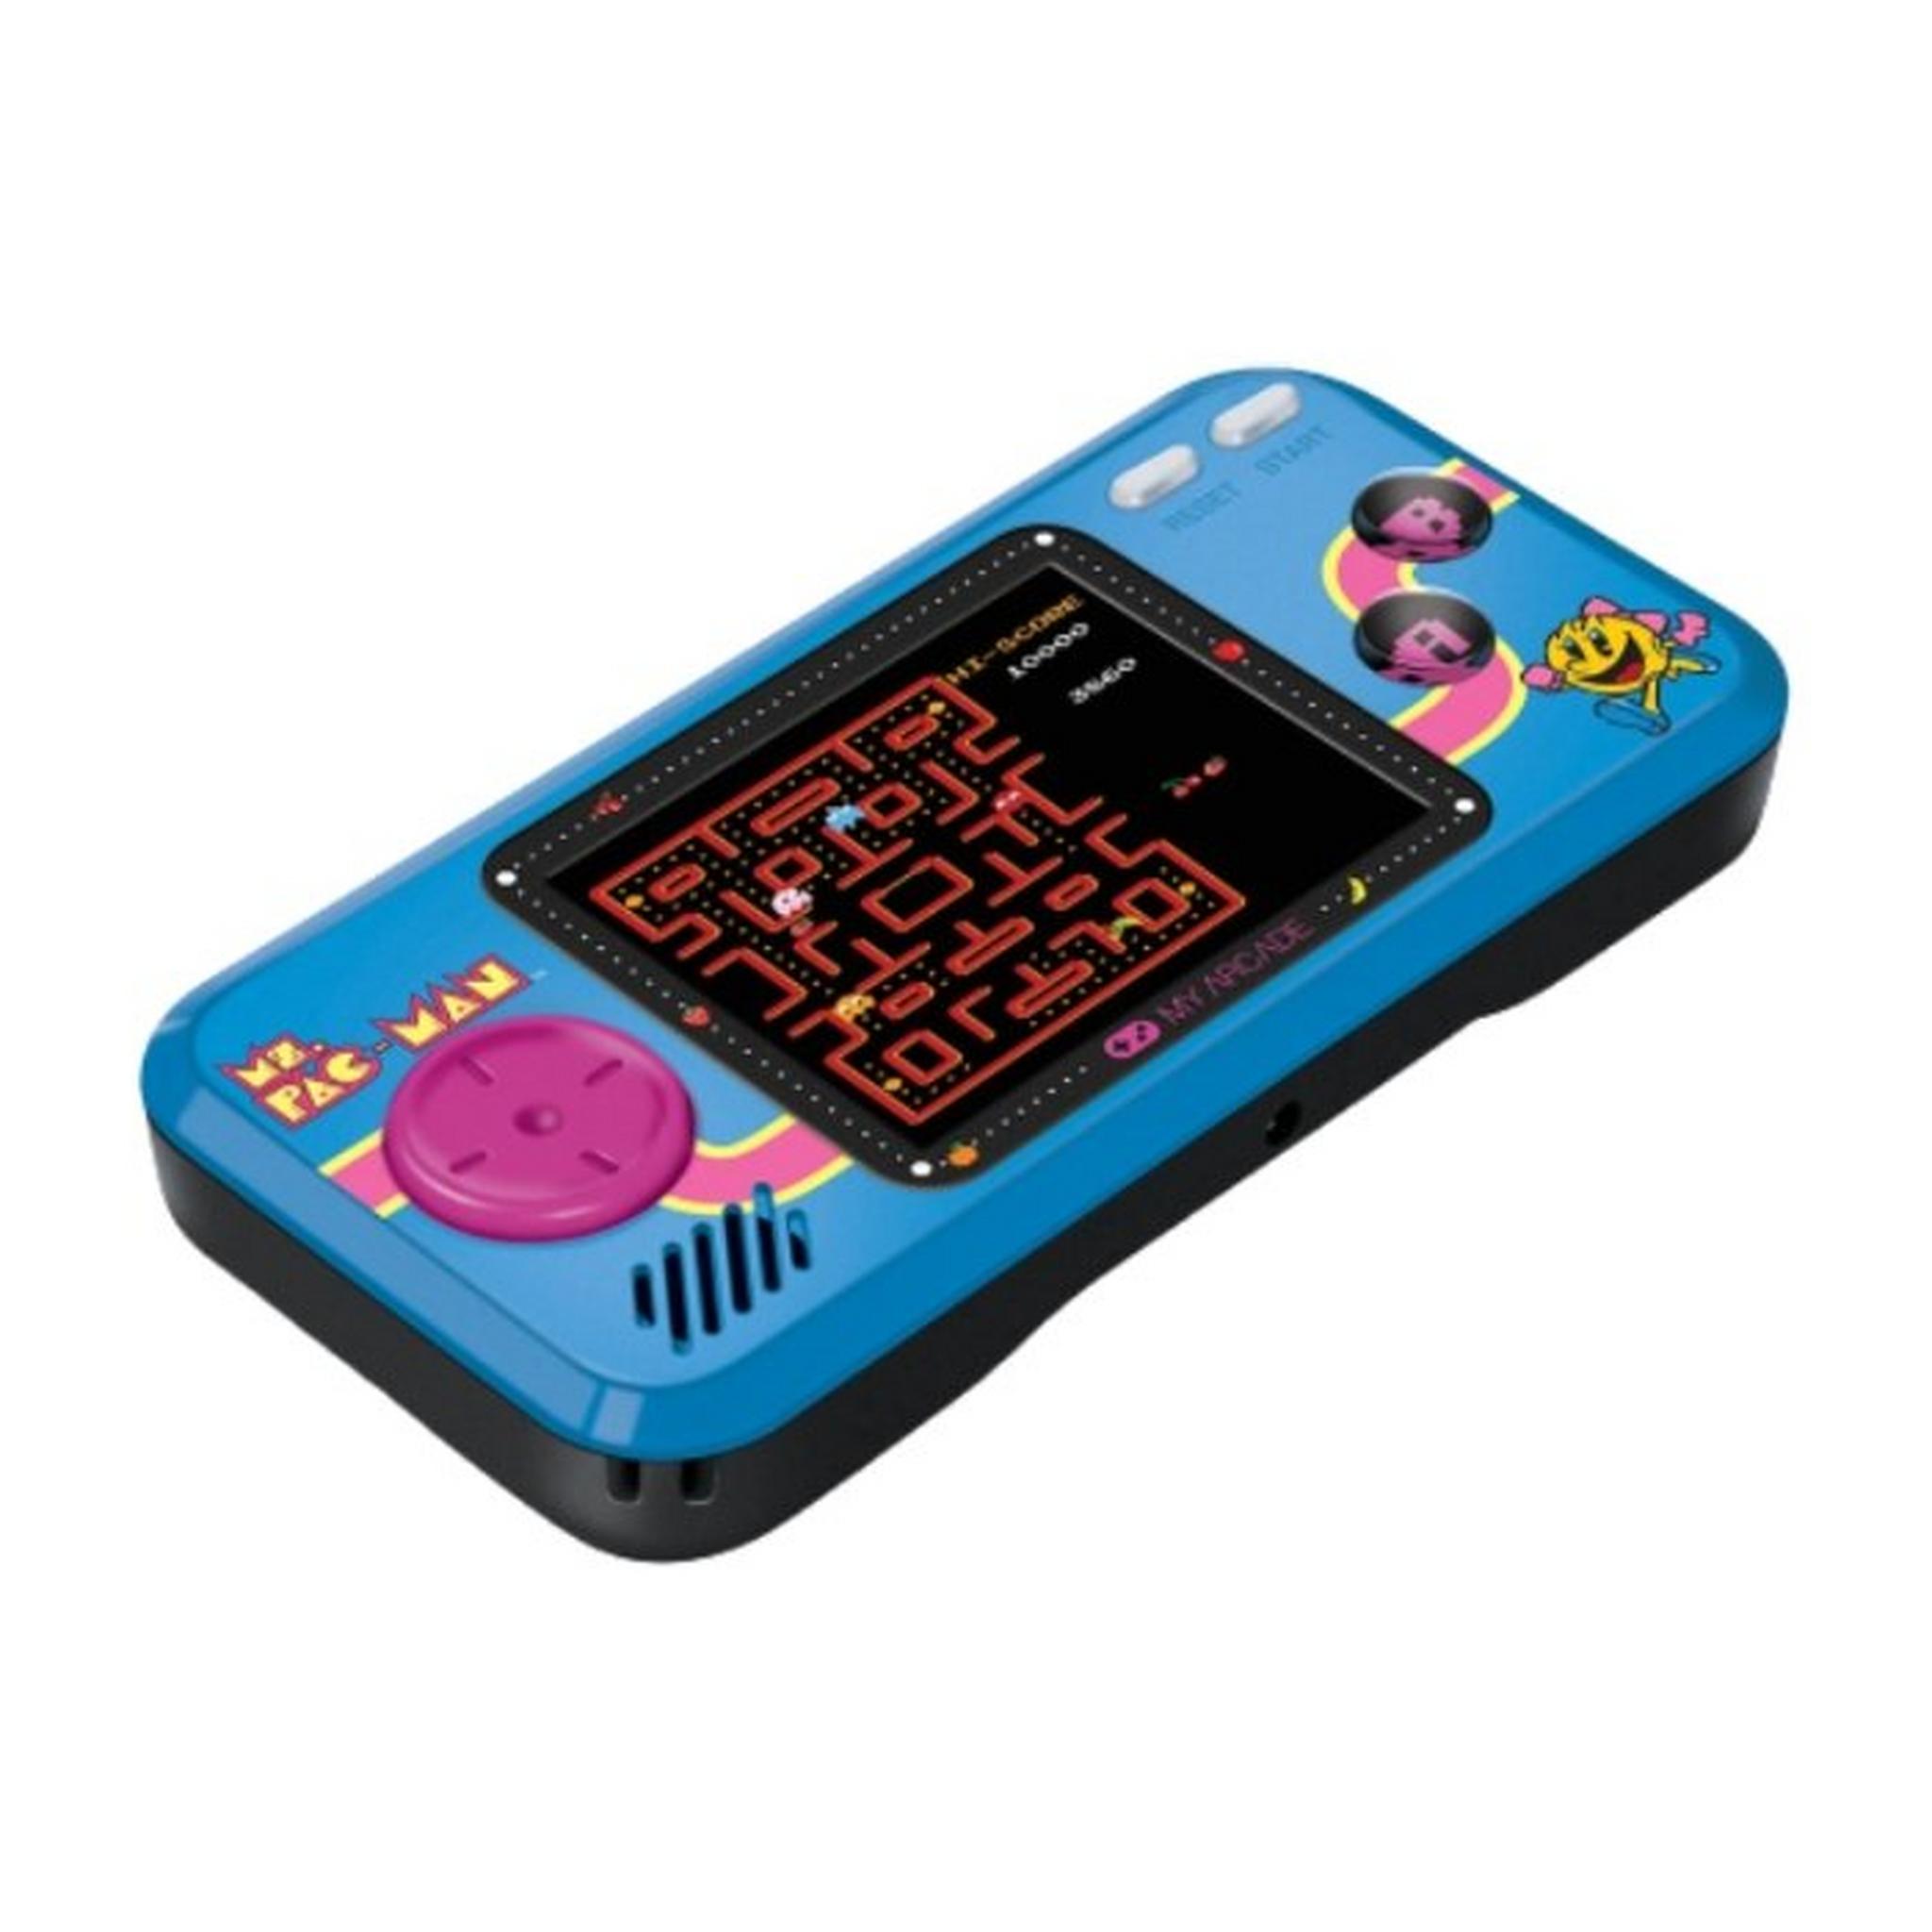 My Arcade Ms. Pac-Man Pocket Player - Blue (DGUNL-3242)